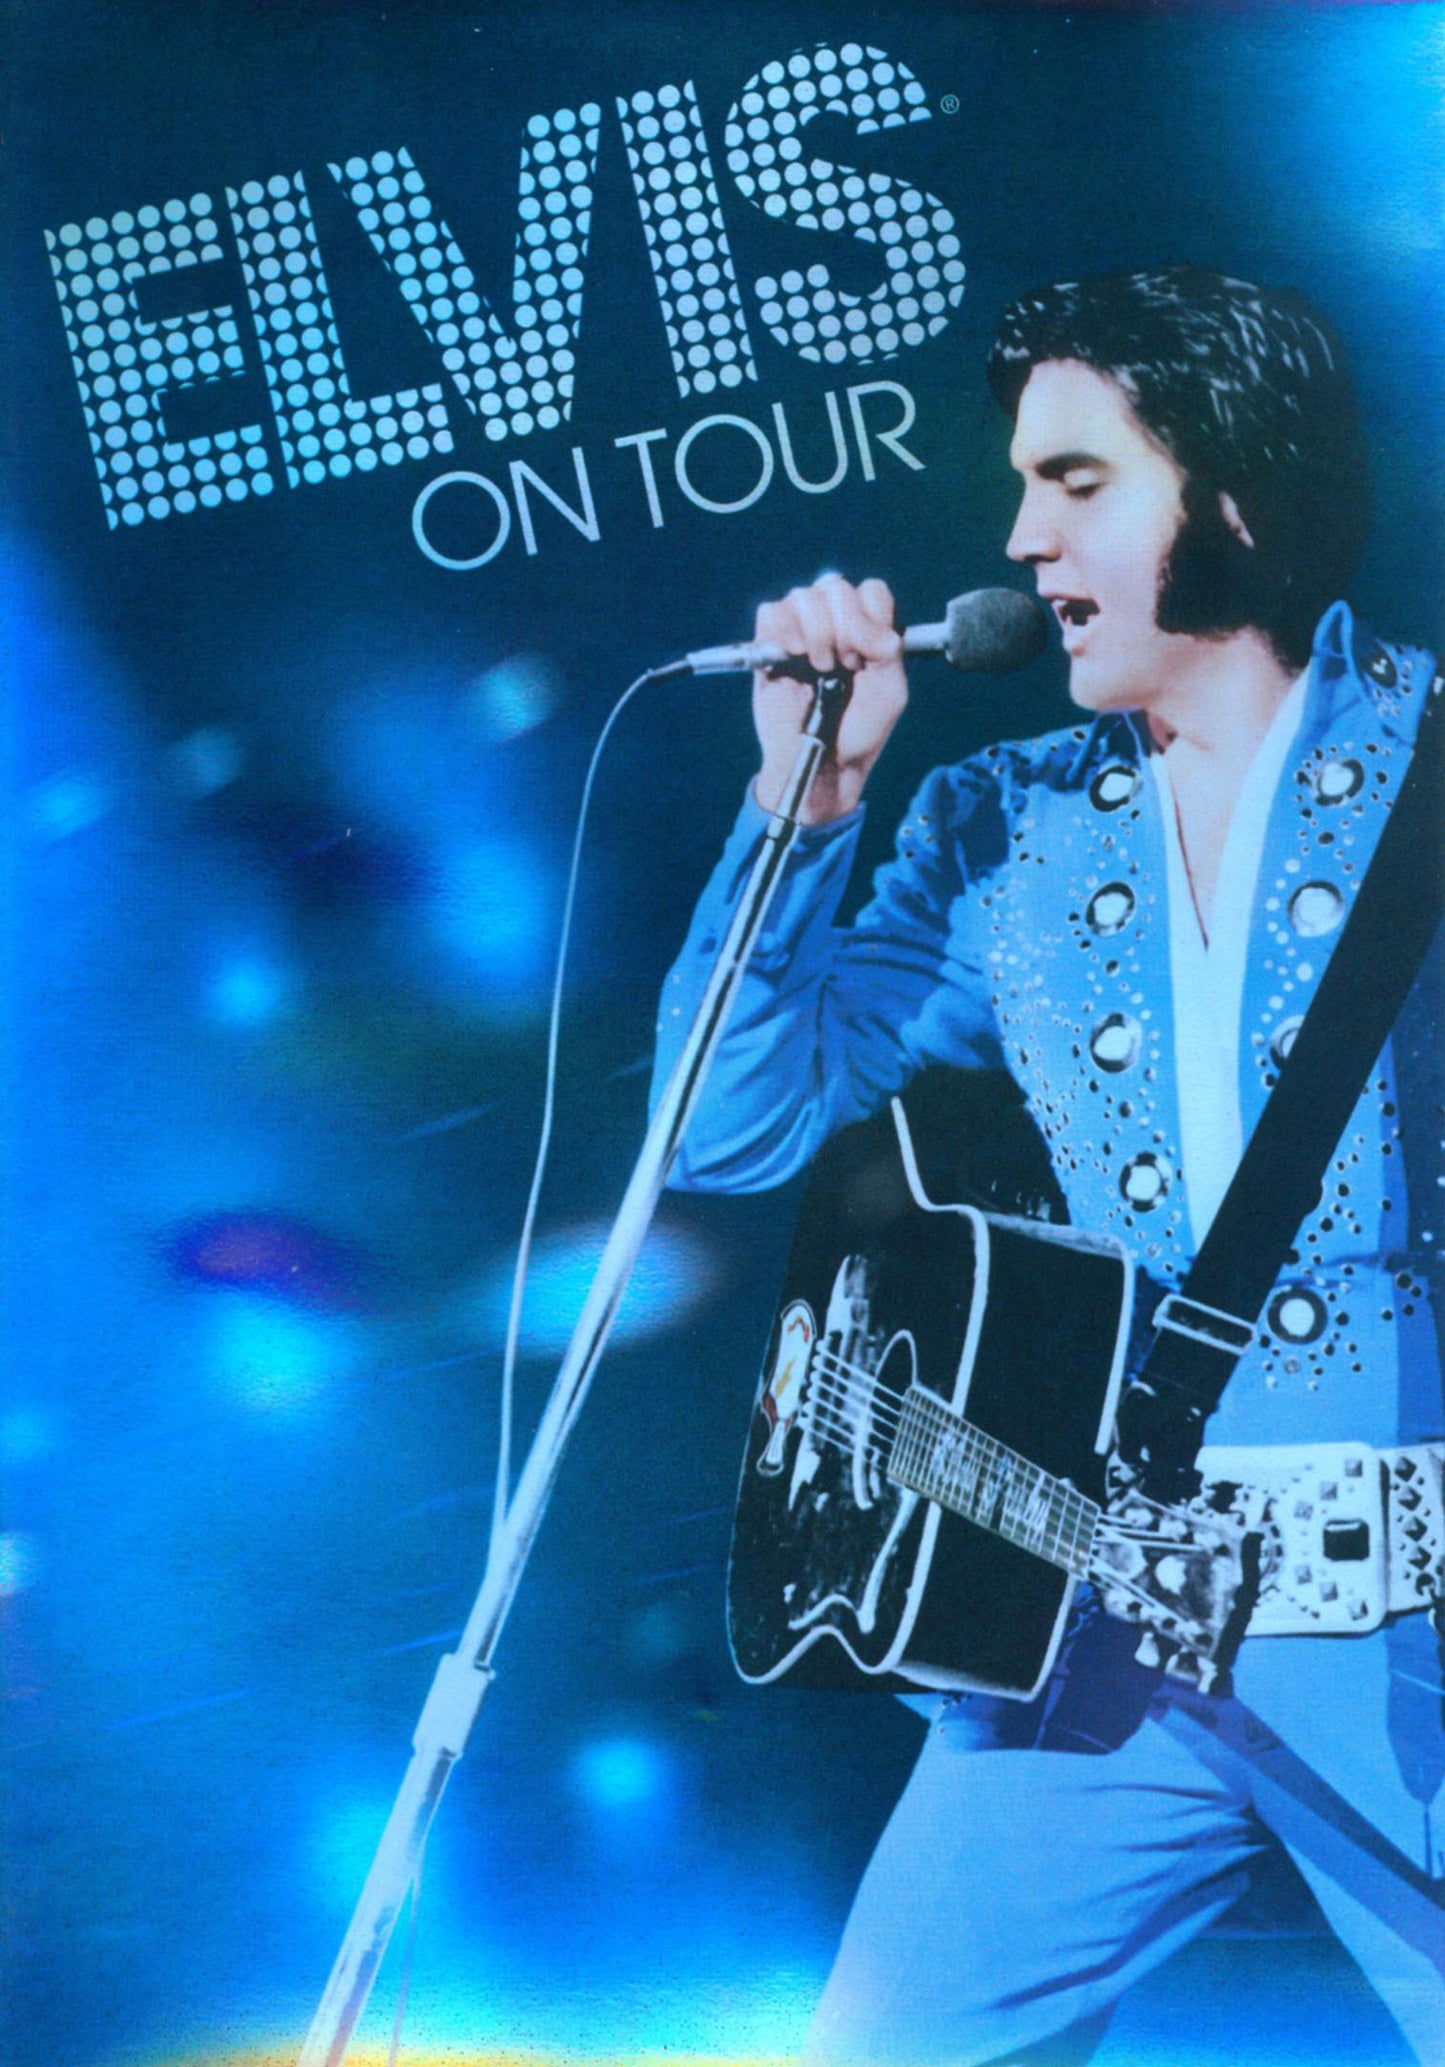 Elvis on Tour cover art